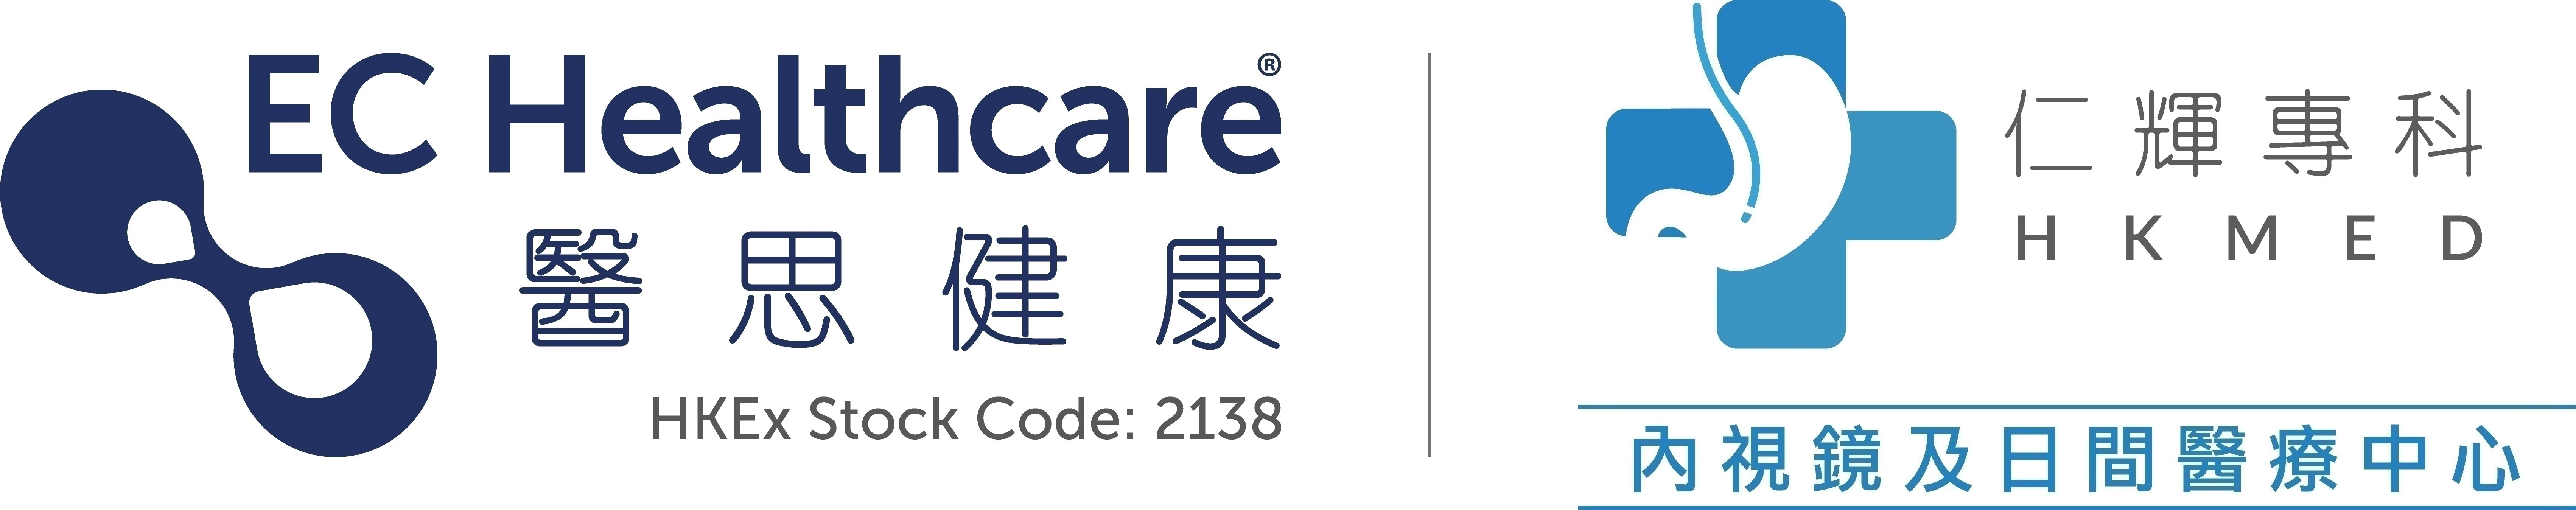 EC Healthcare with brand logo_HKMED.png